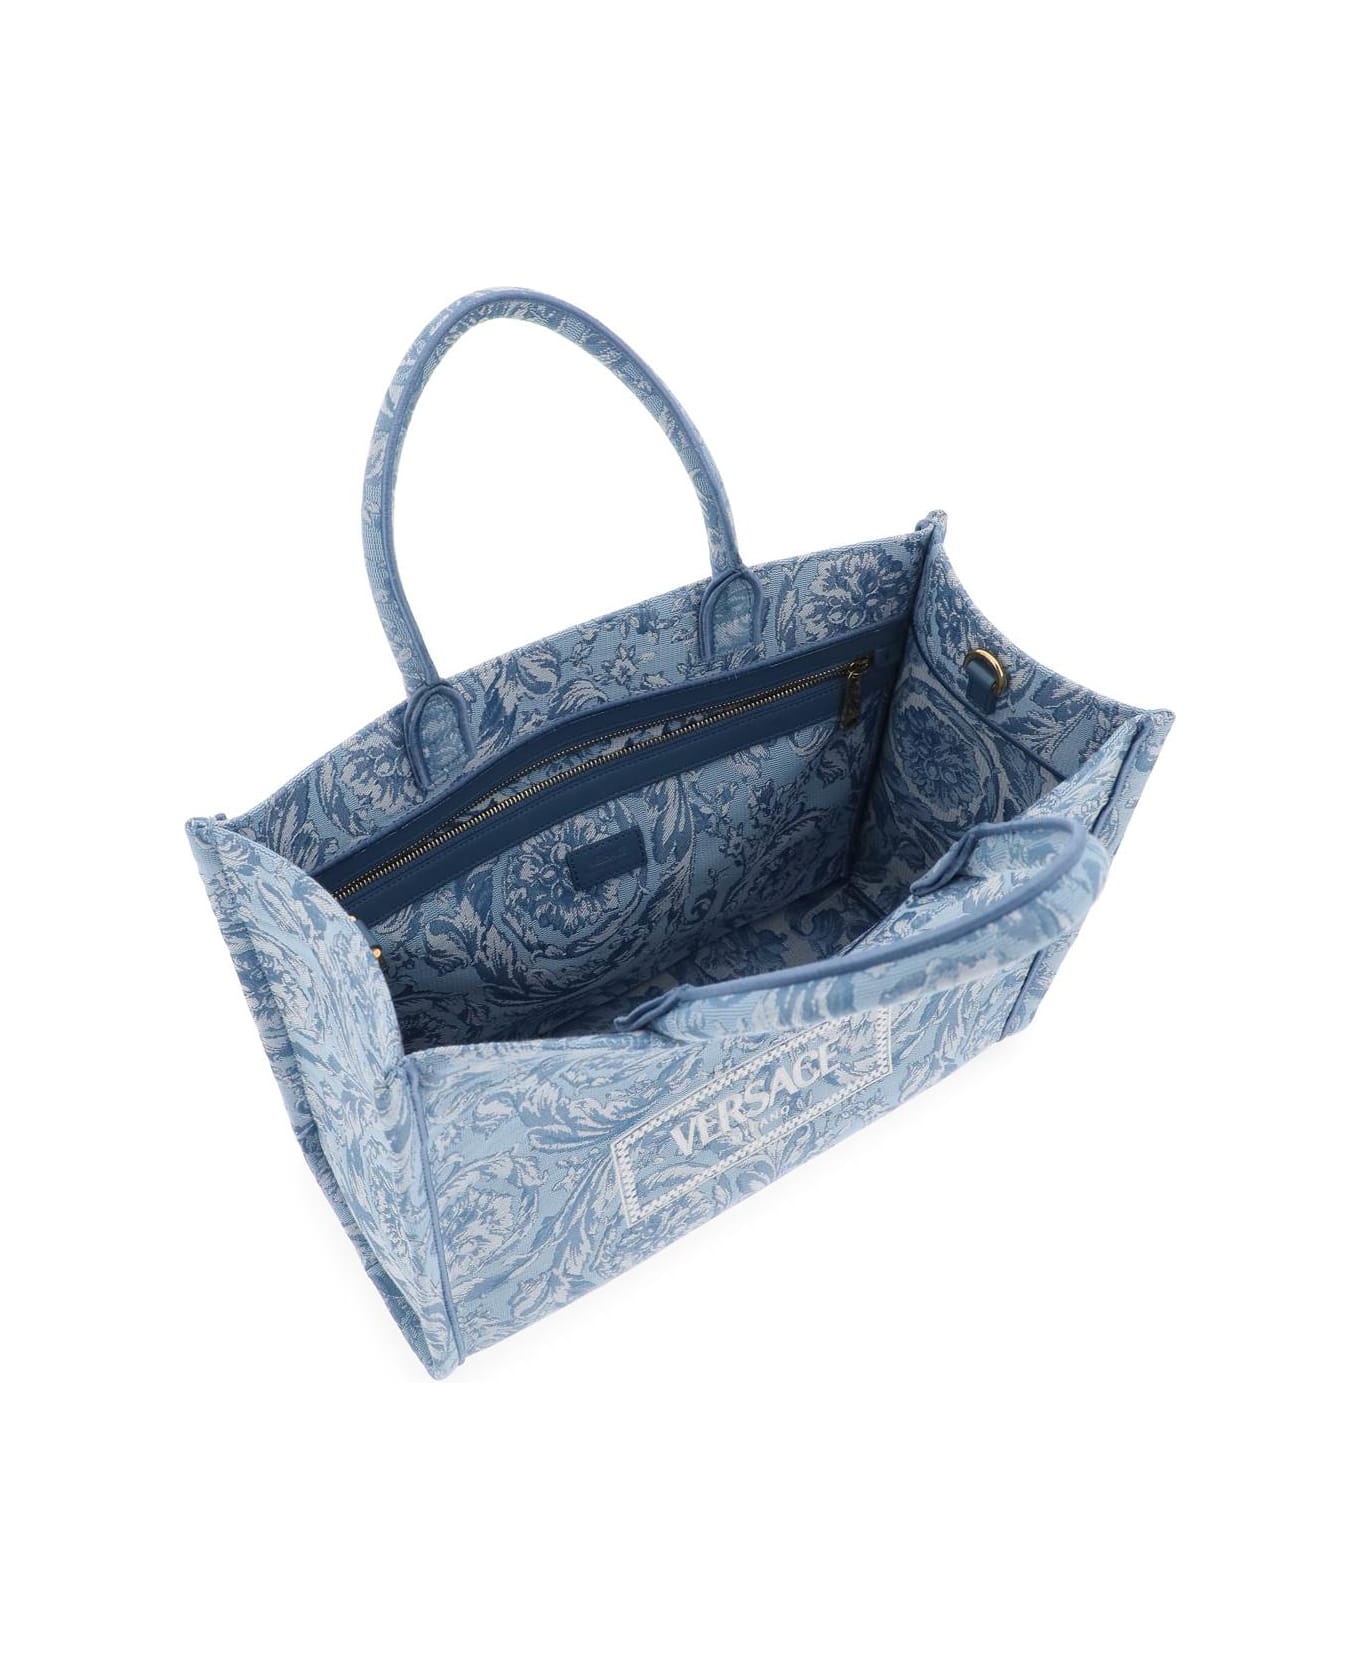 Versace Athena Logo Embroidered Tote Bag - BABY BLUE GENTIAN BLUE VE (Light blue) トートバッグ